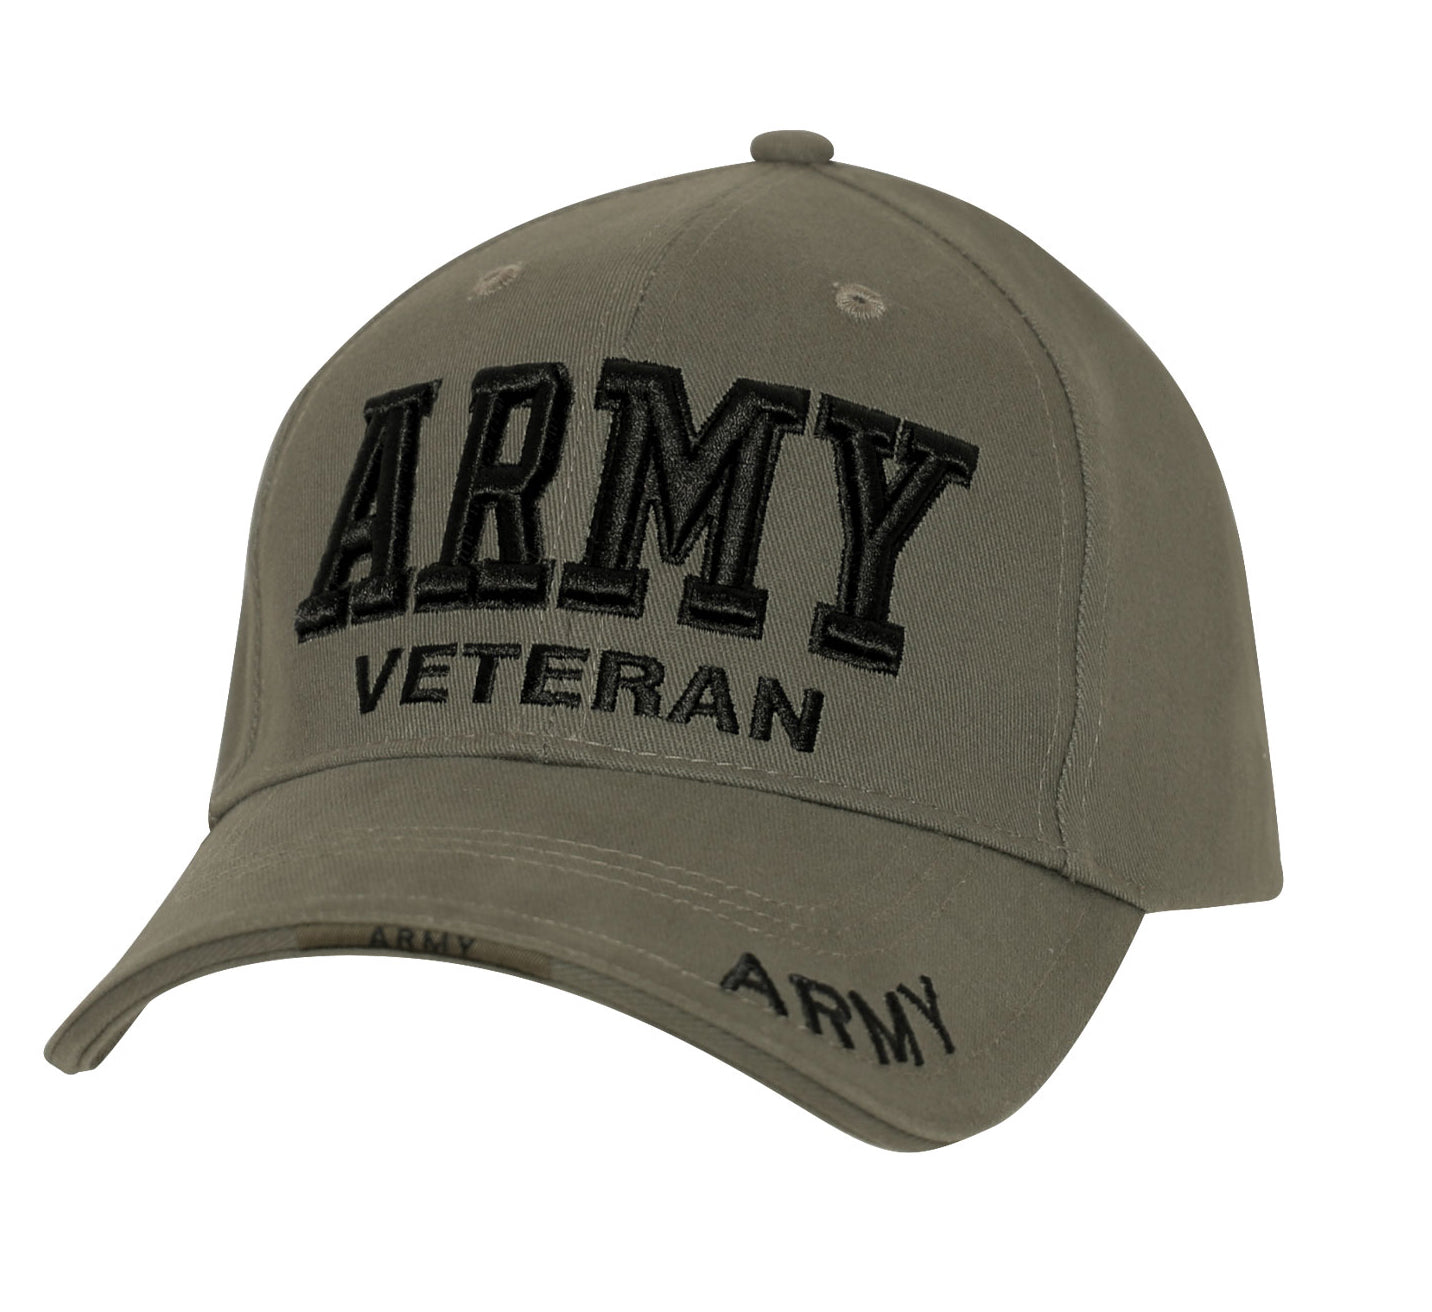 Deluxe Low Profile Army Veteran Cap